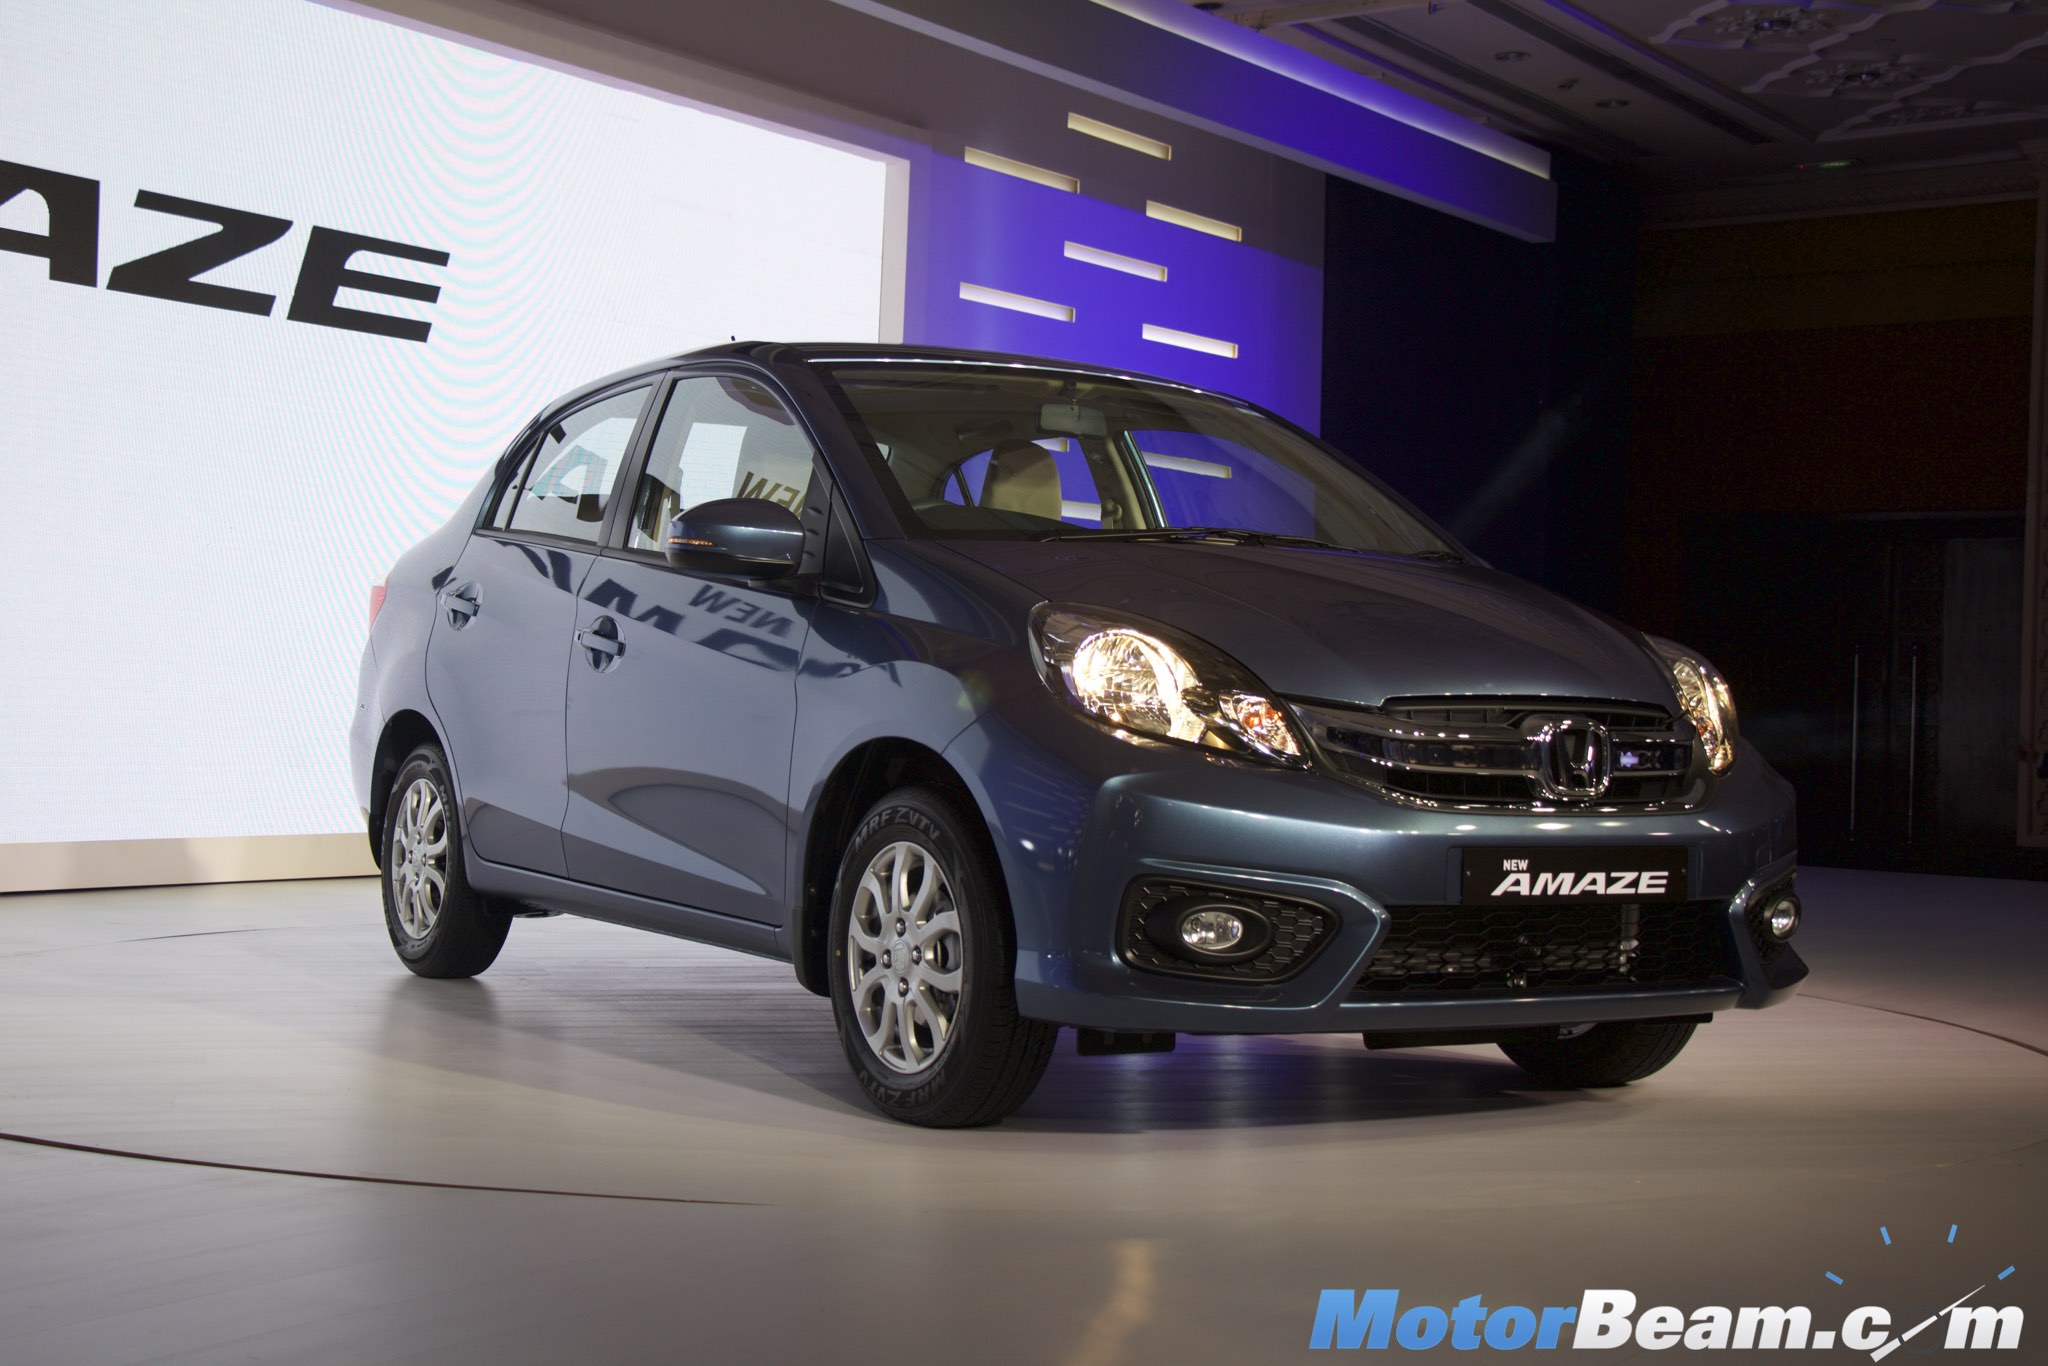 Honda Amaze Facelift Price